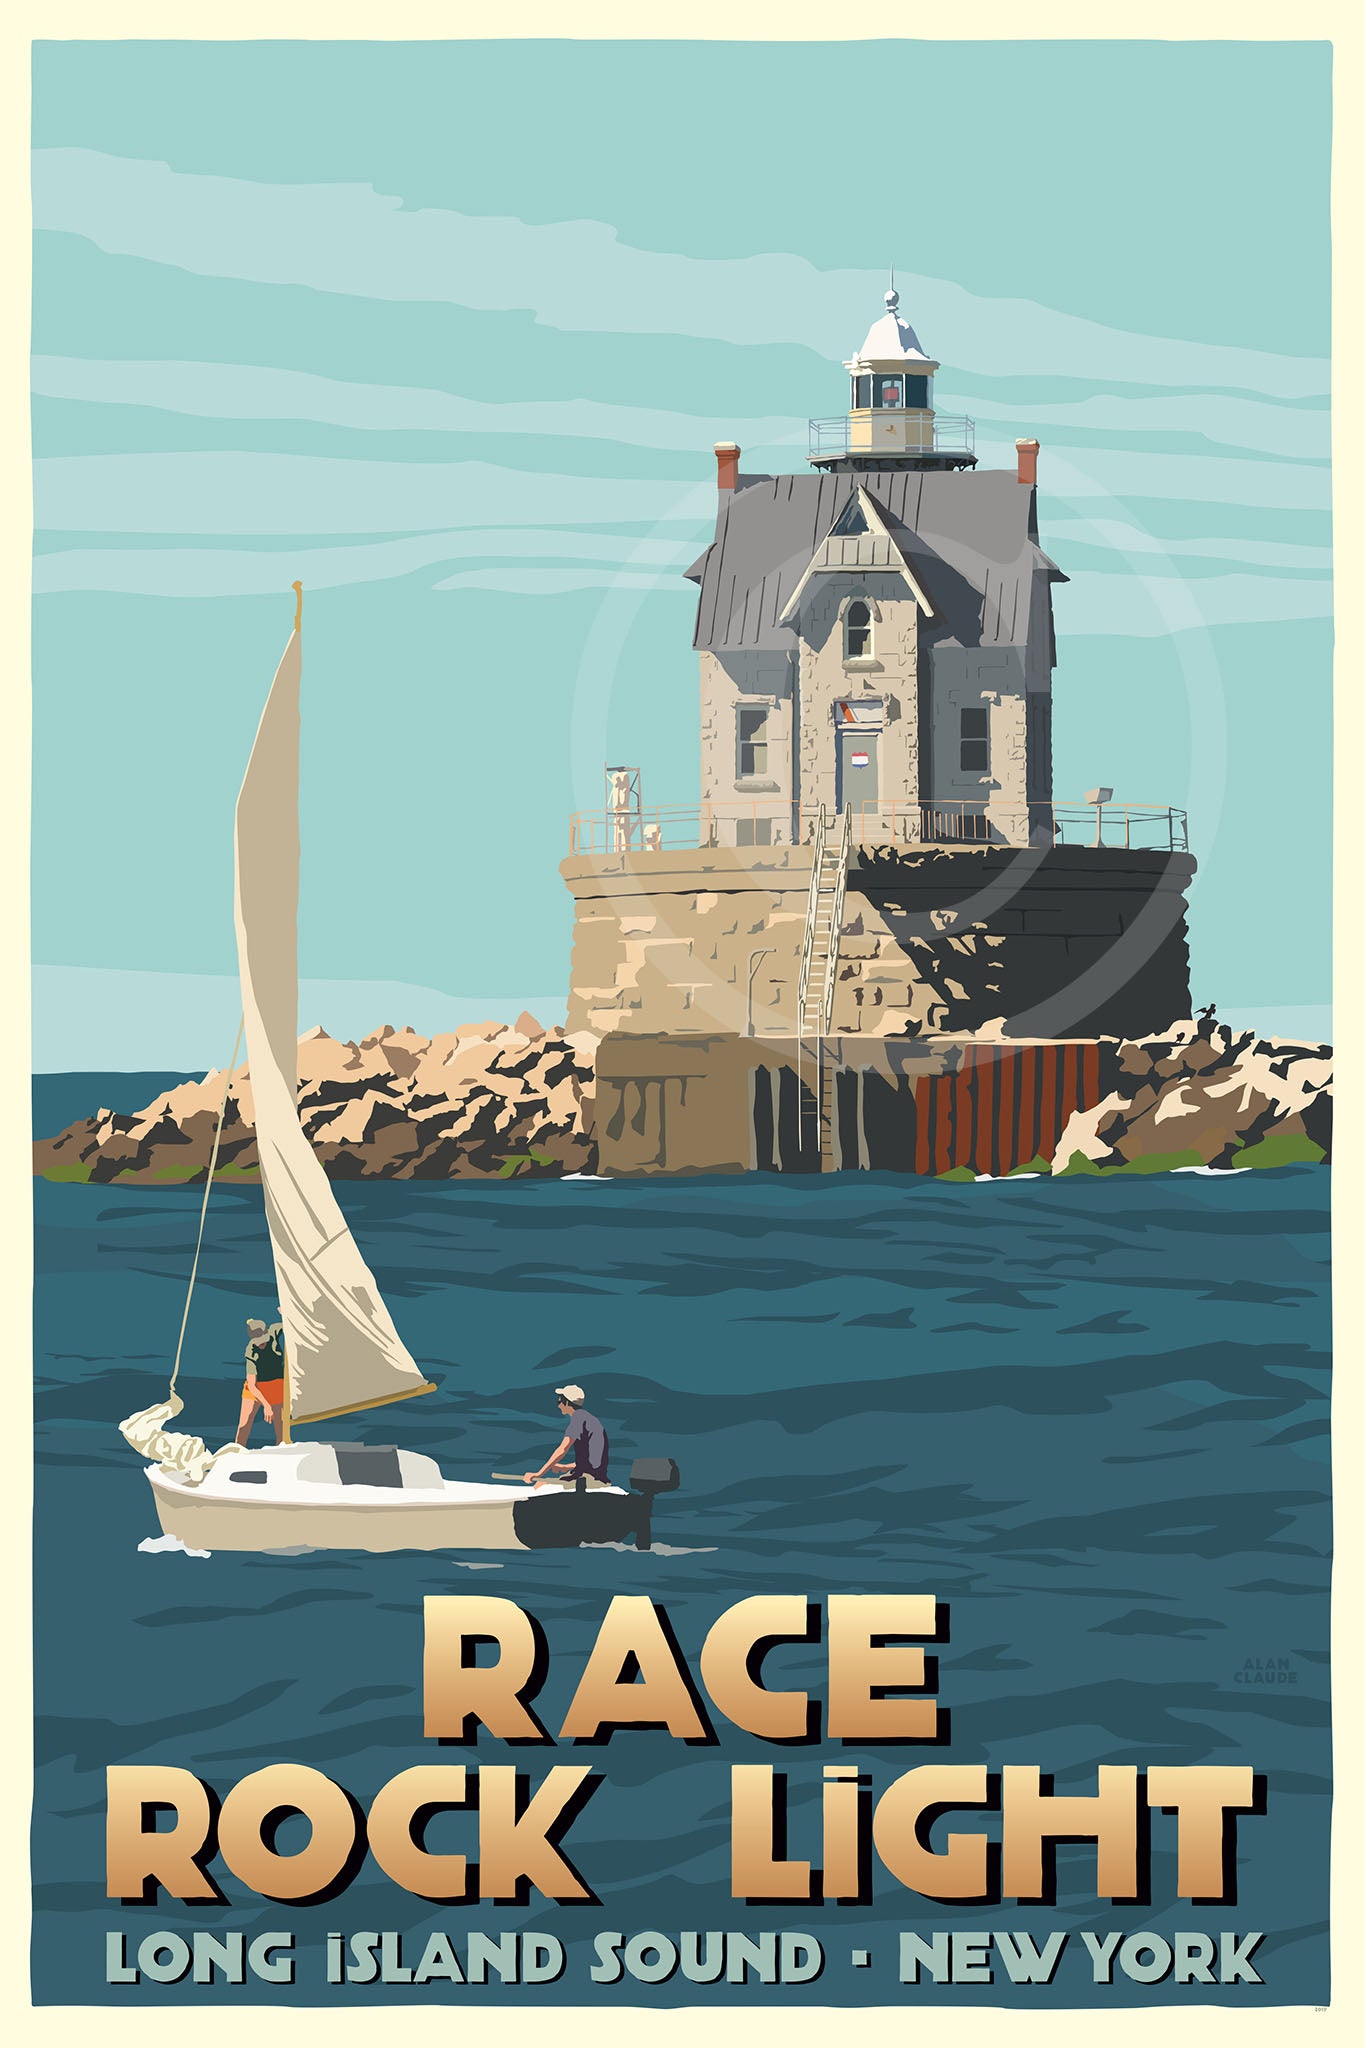 Race Rock Light Art Print 24" x 36" Travel Poster By Alan Claude - New York